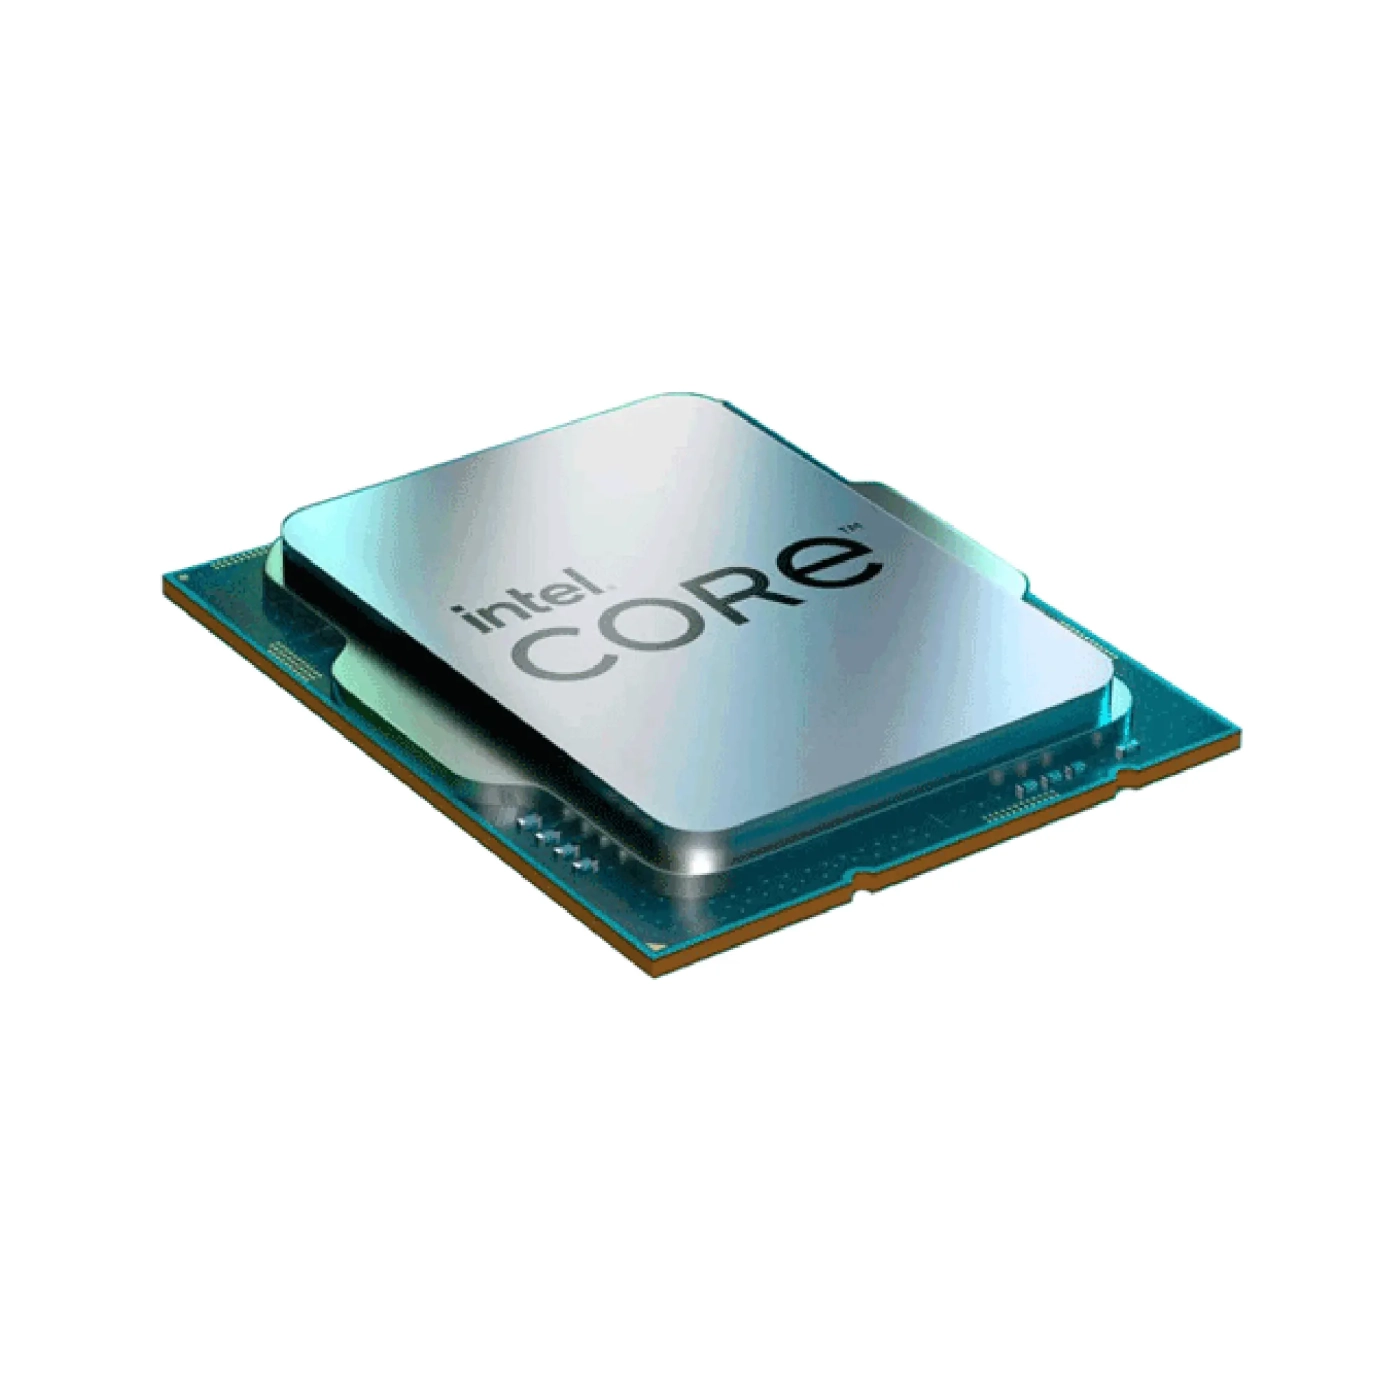 Intel Core i5-12400F, 6C/12T, 2.50-4.40GHz, boxed (BX8071512400F